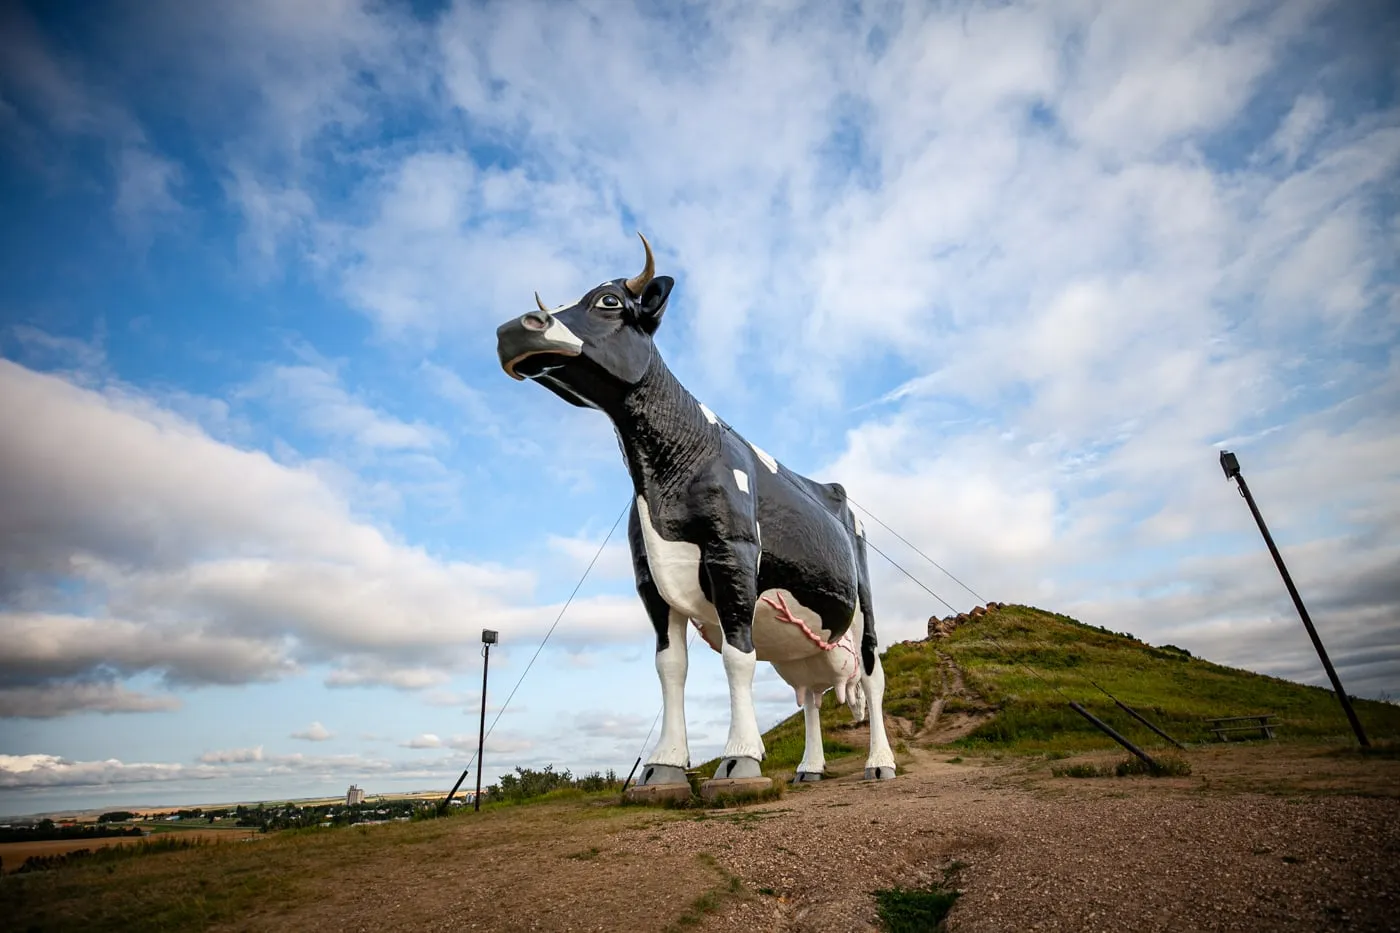 Salem Sue: The World's Largest Holstein Cow in New Salem, North Dakota | North Dakota Roadside Attractions